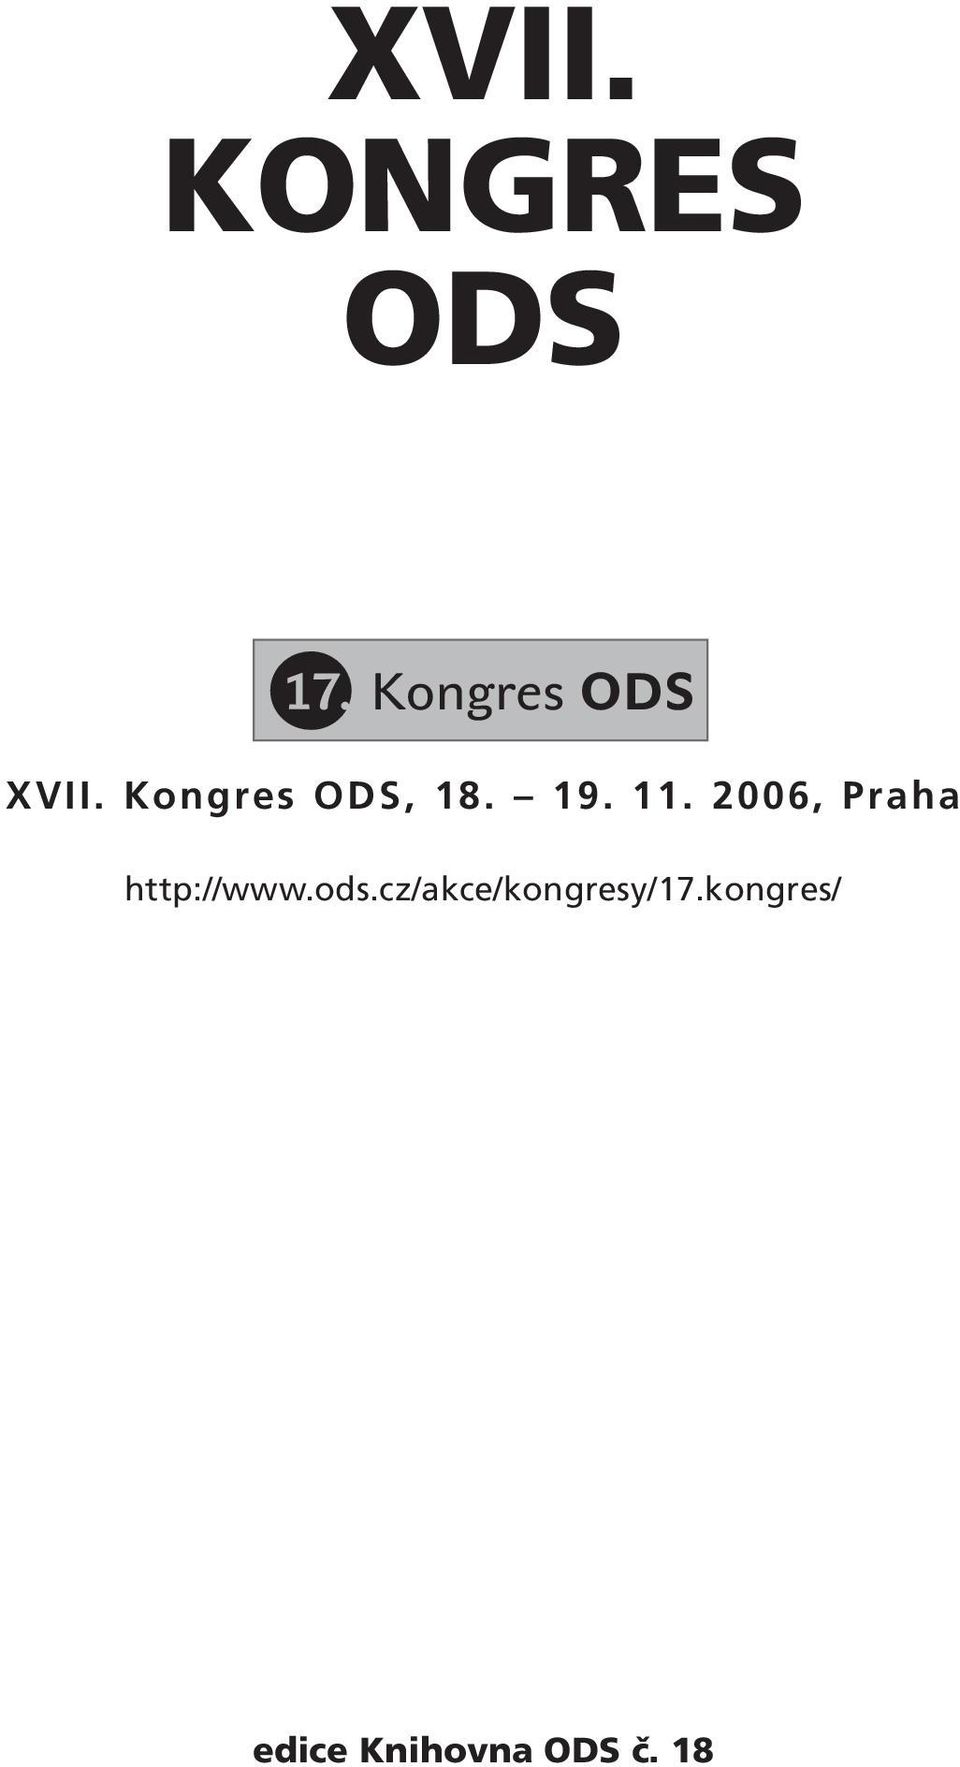 2006, Praha http://www.ods.